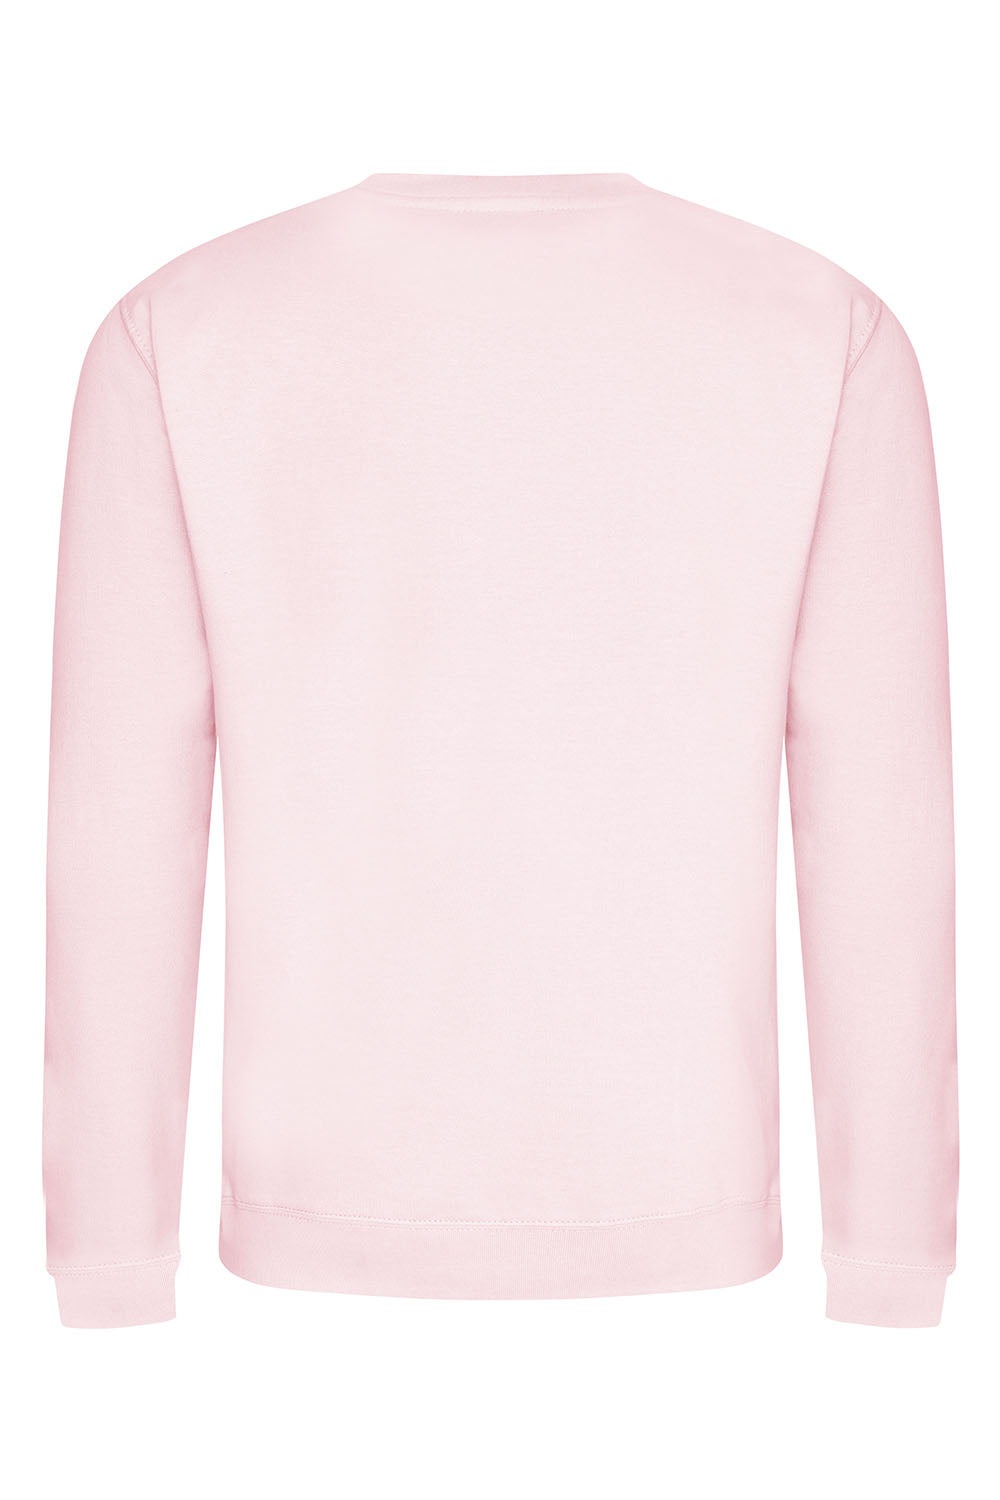 Plain Sweatshirt In Baby Pink (Single)